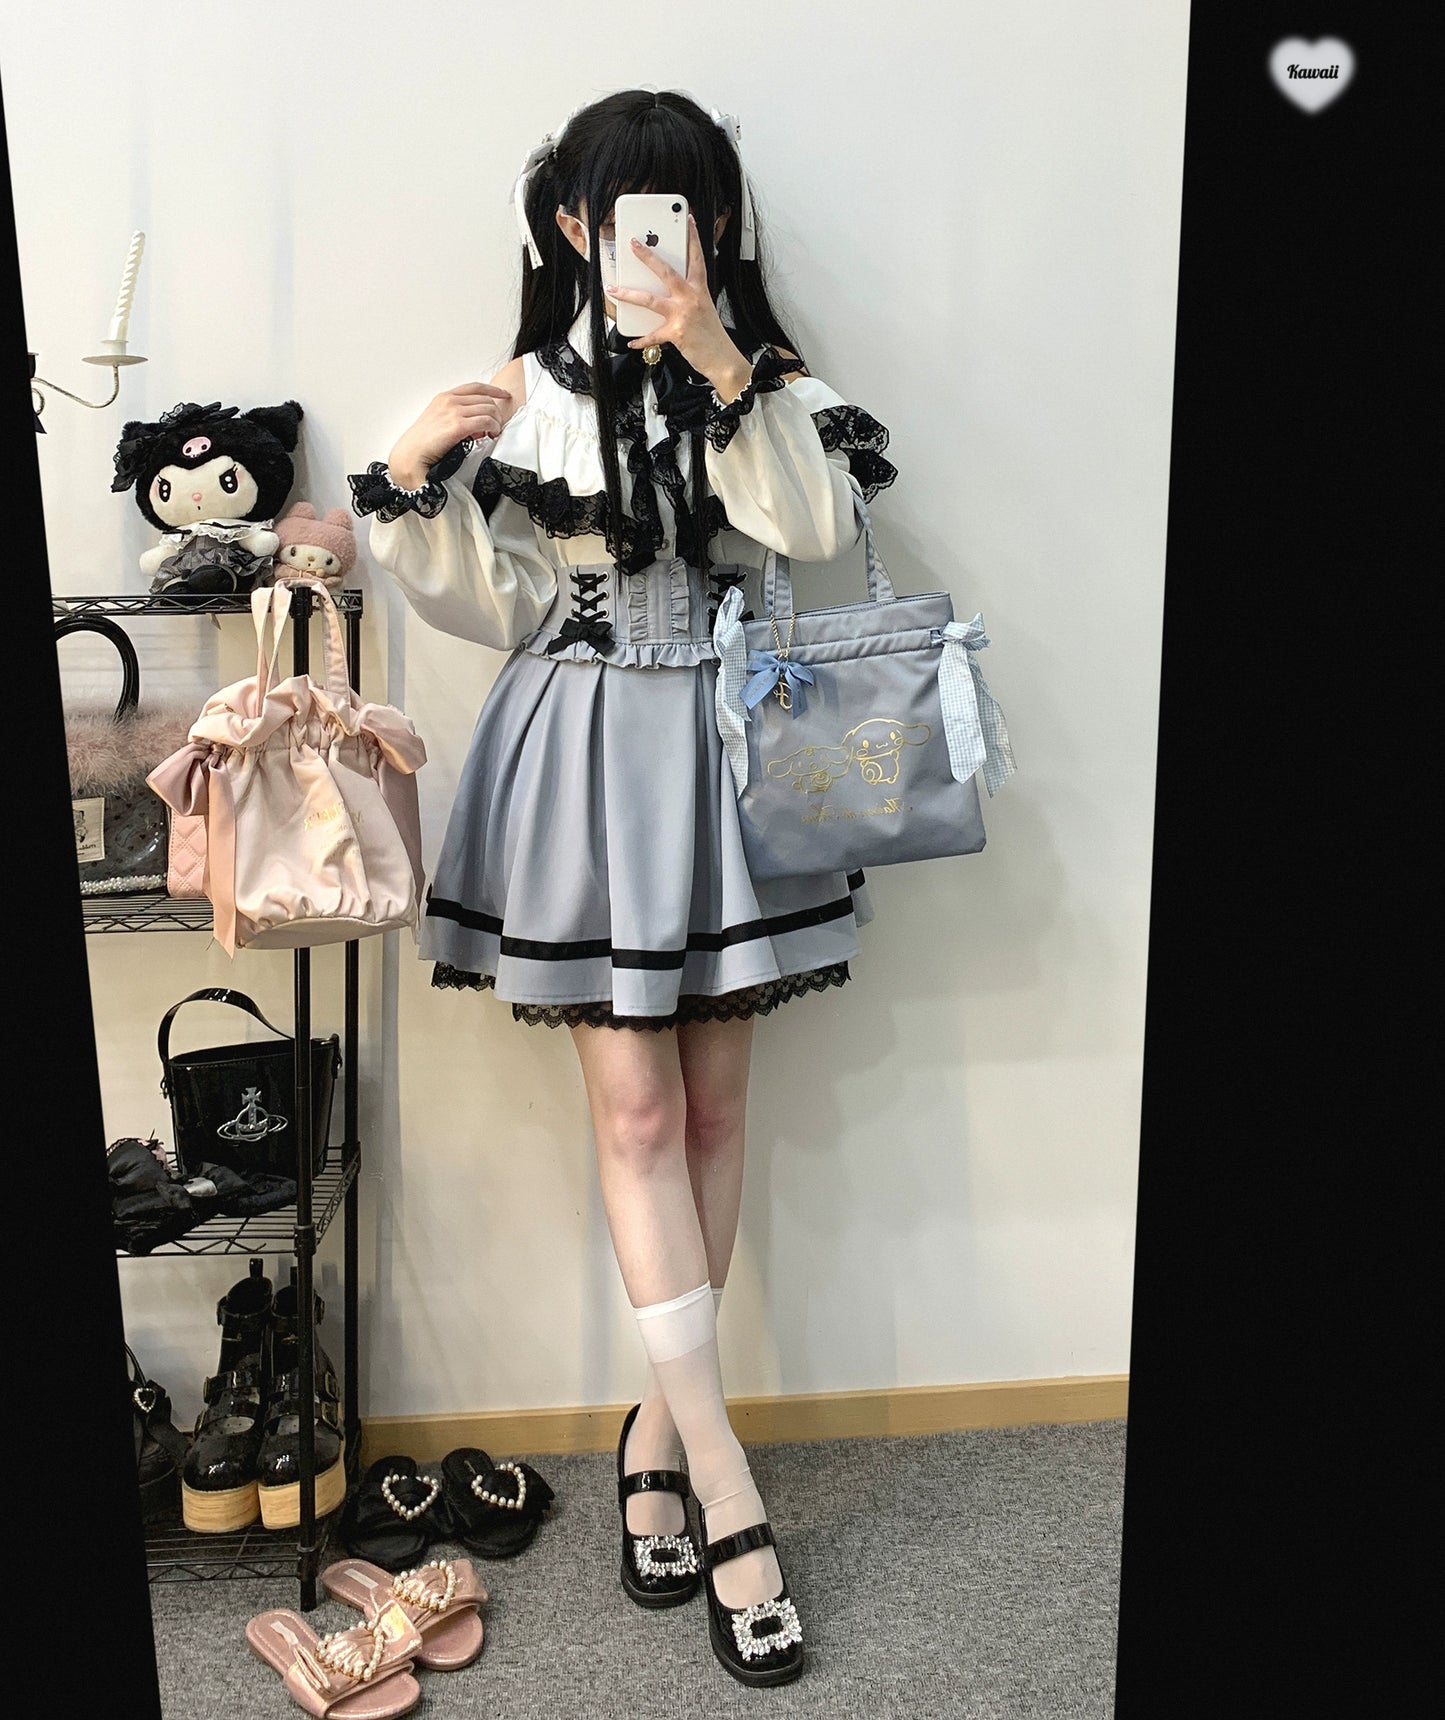 Jirai Kei Skirt High Waist Lace Up Skirt With Bow Tie 31860:396656